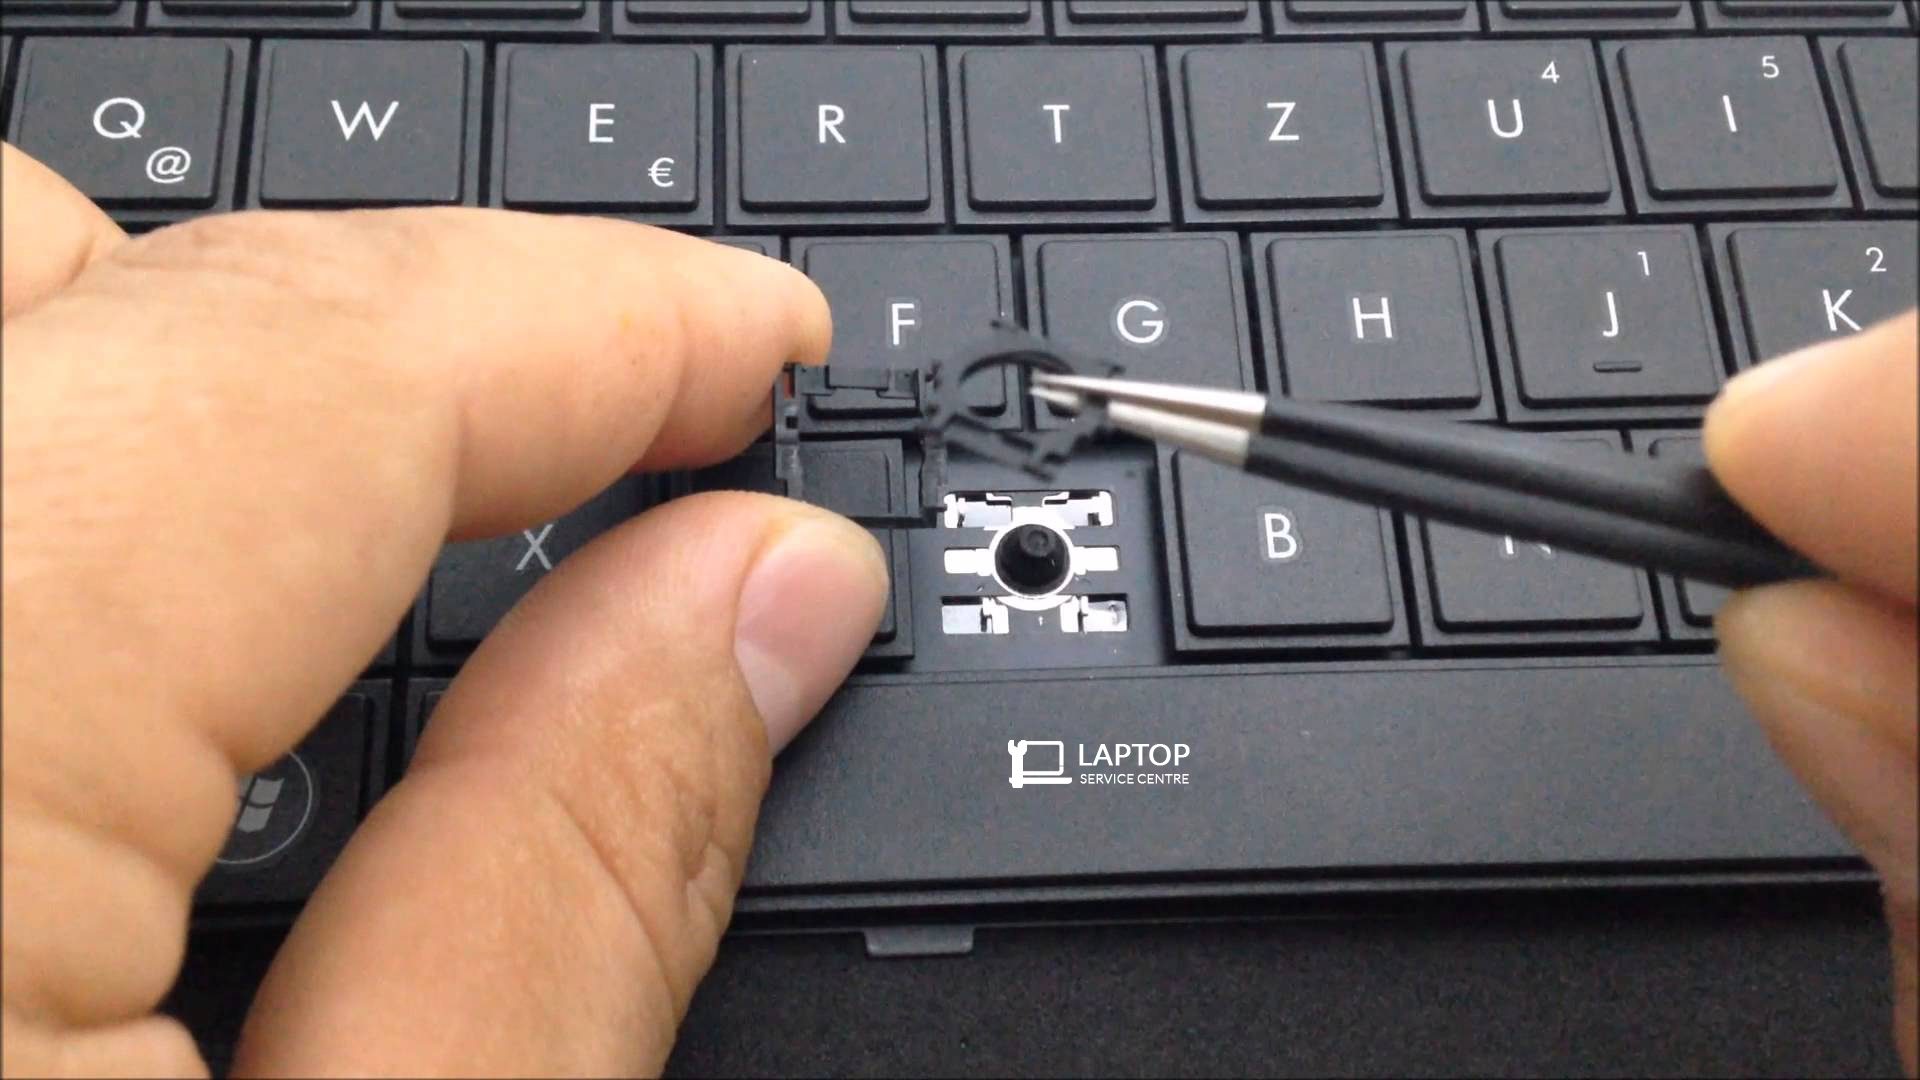 HP Laptop Keyboard Repair